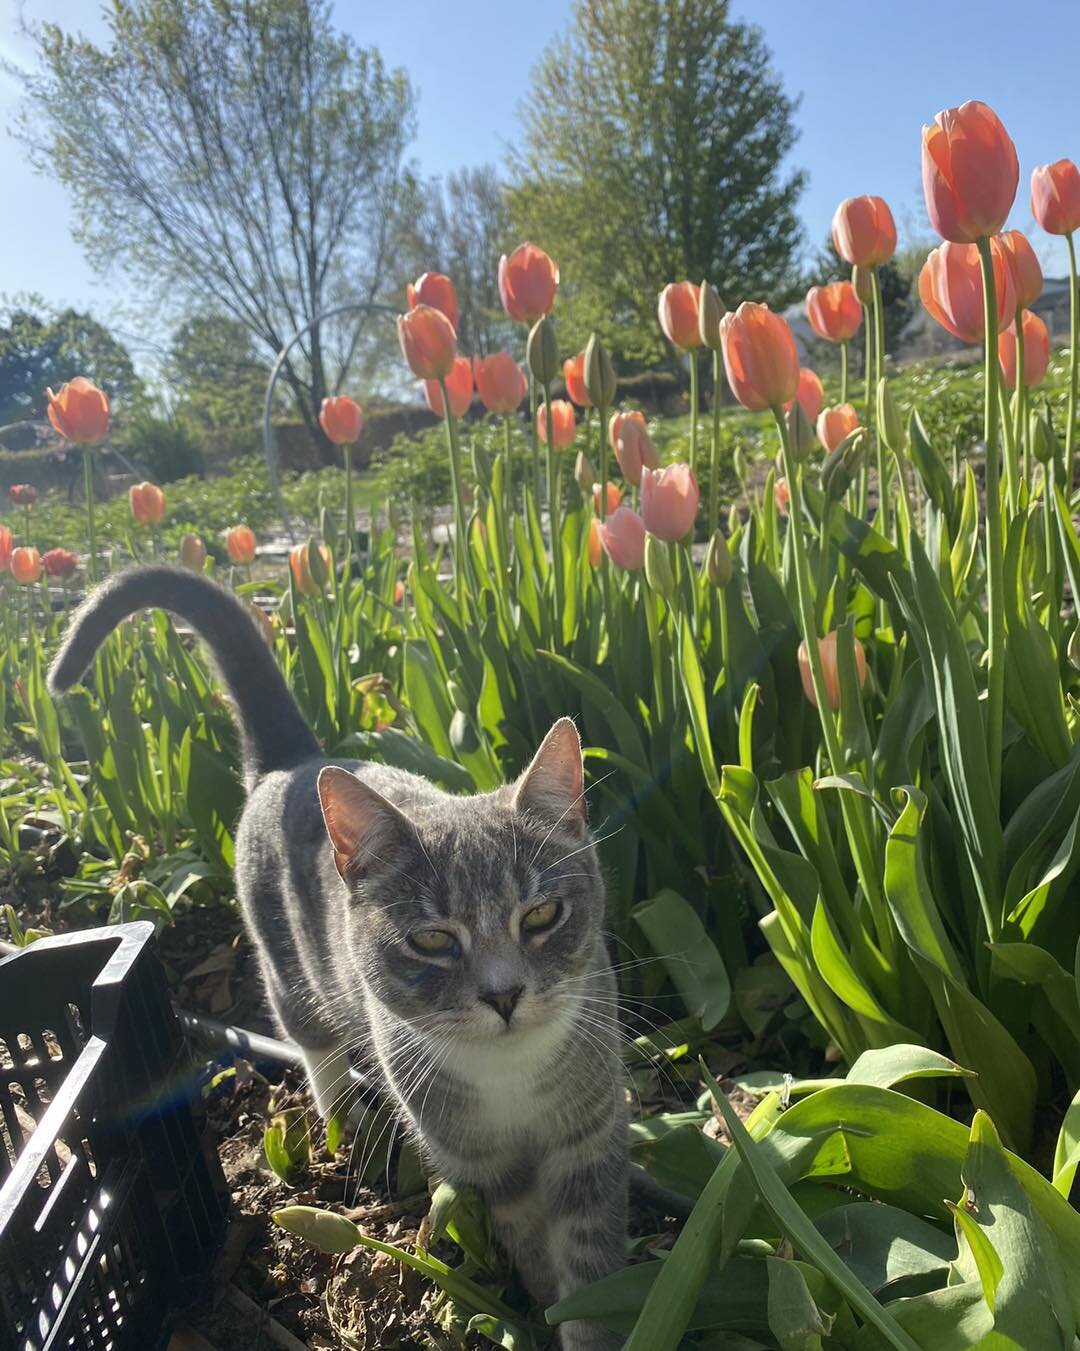 Ceecee 🐱 is helping me harvest tulips 💐 

#theflowercart #localfreshflowers #kennewickflowers #tulips #tulips #localflowers  #catsofinstagram #farmcat #catscatscats #tulipslover